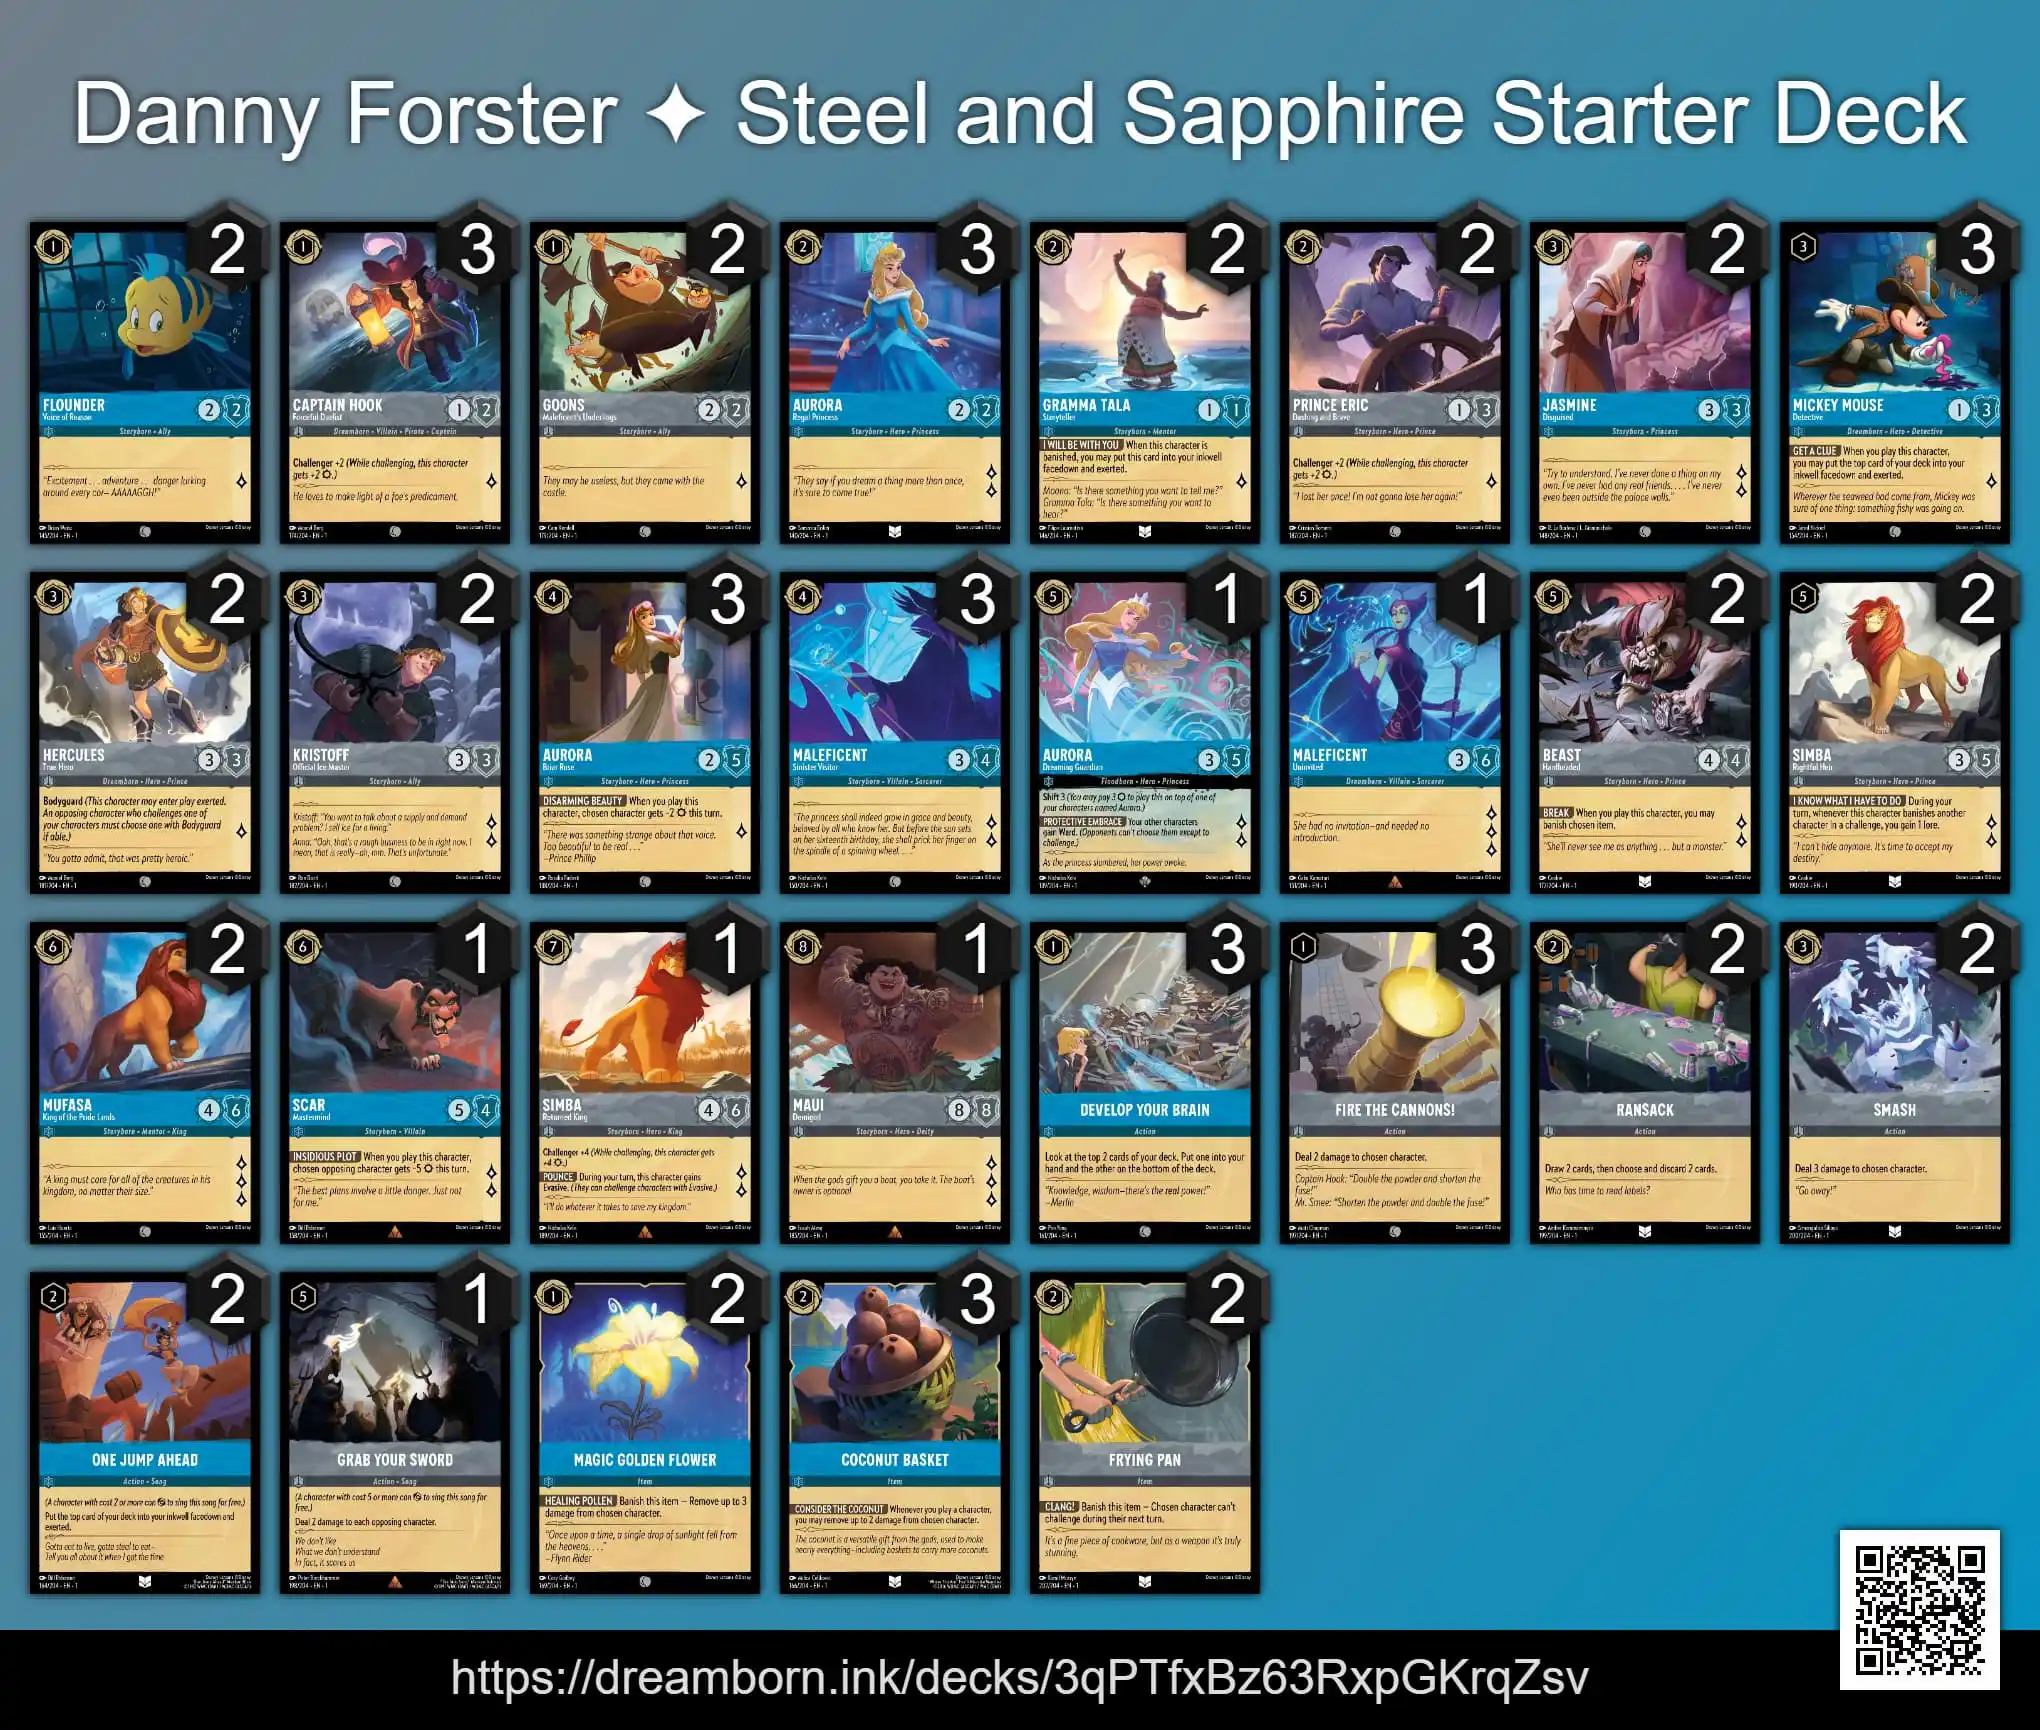 Full card list of Steel and Sapphire Disney Lorcana starter deck